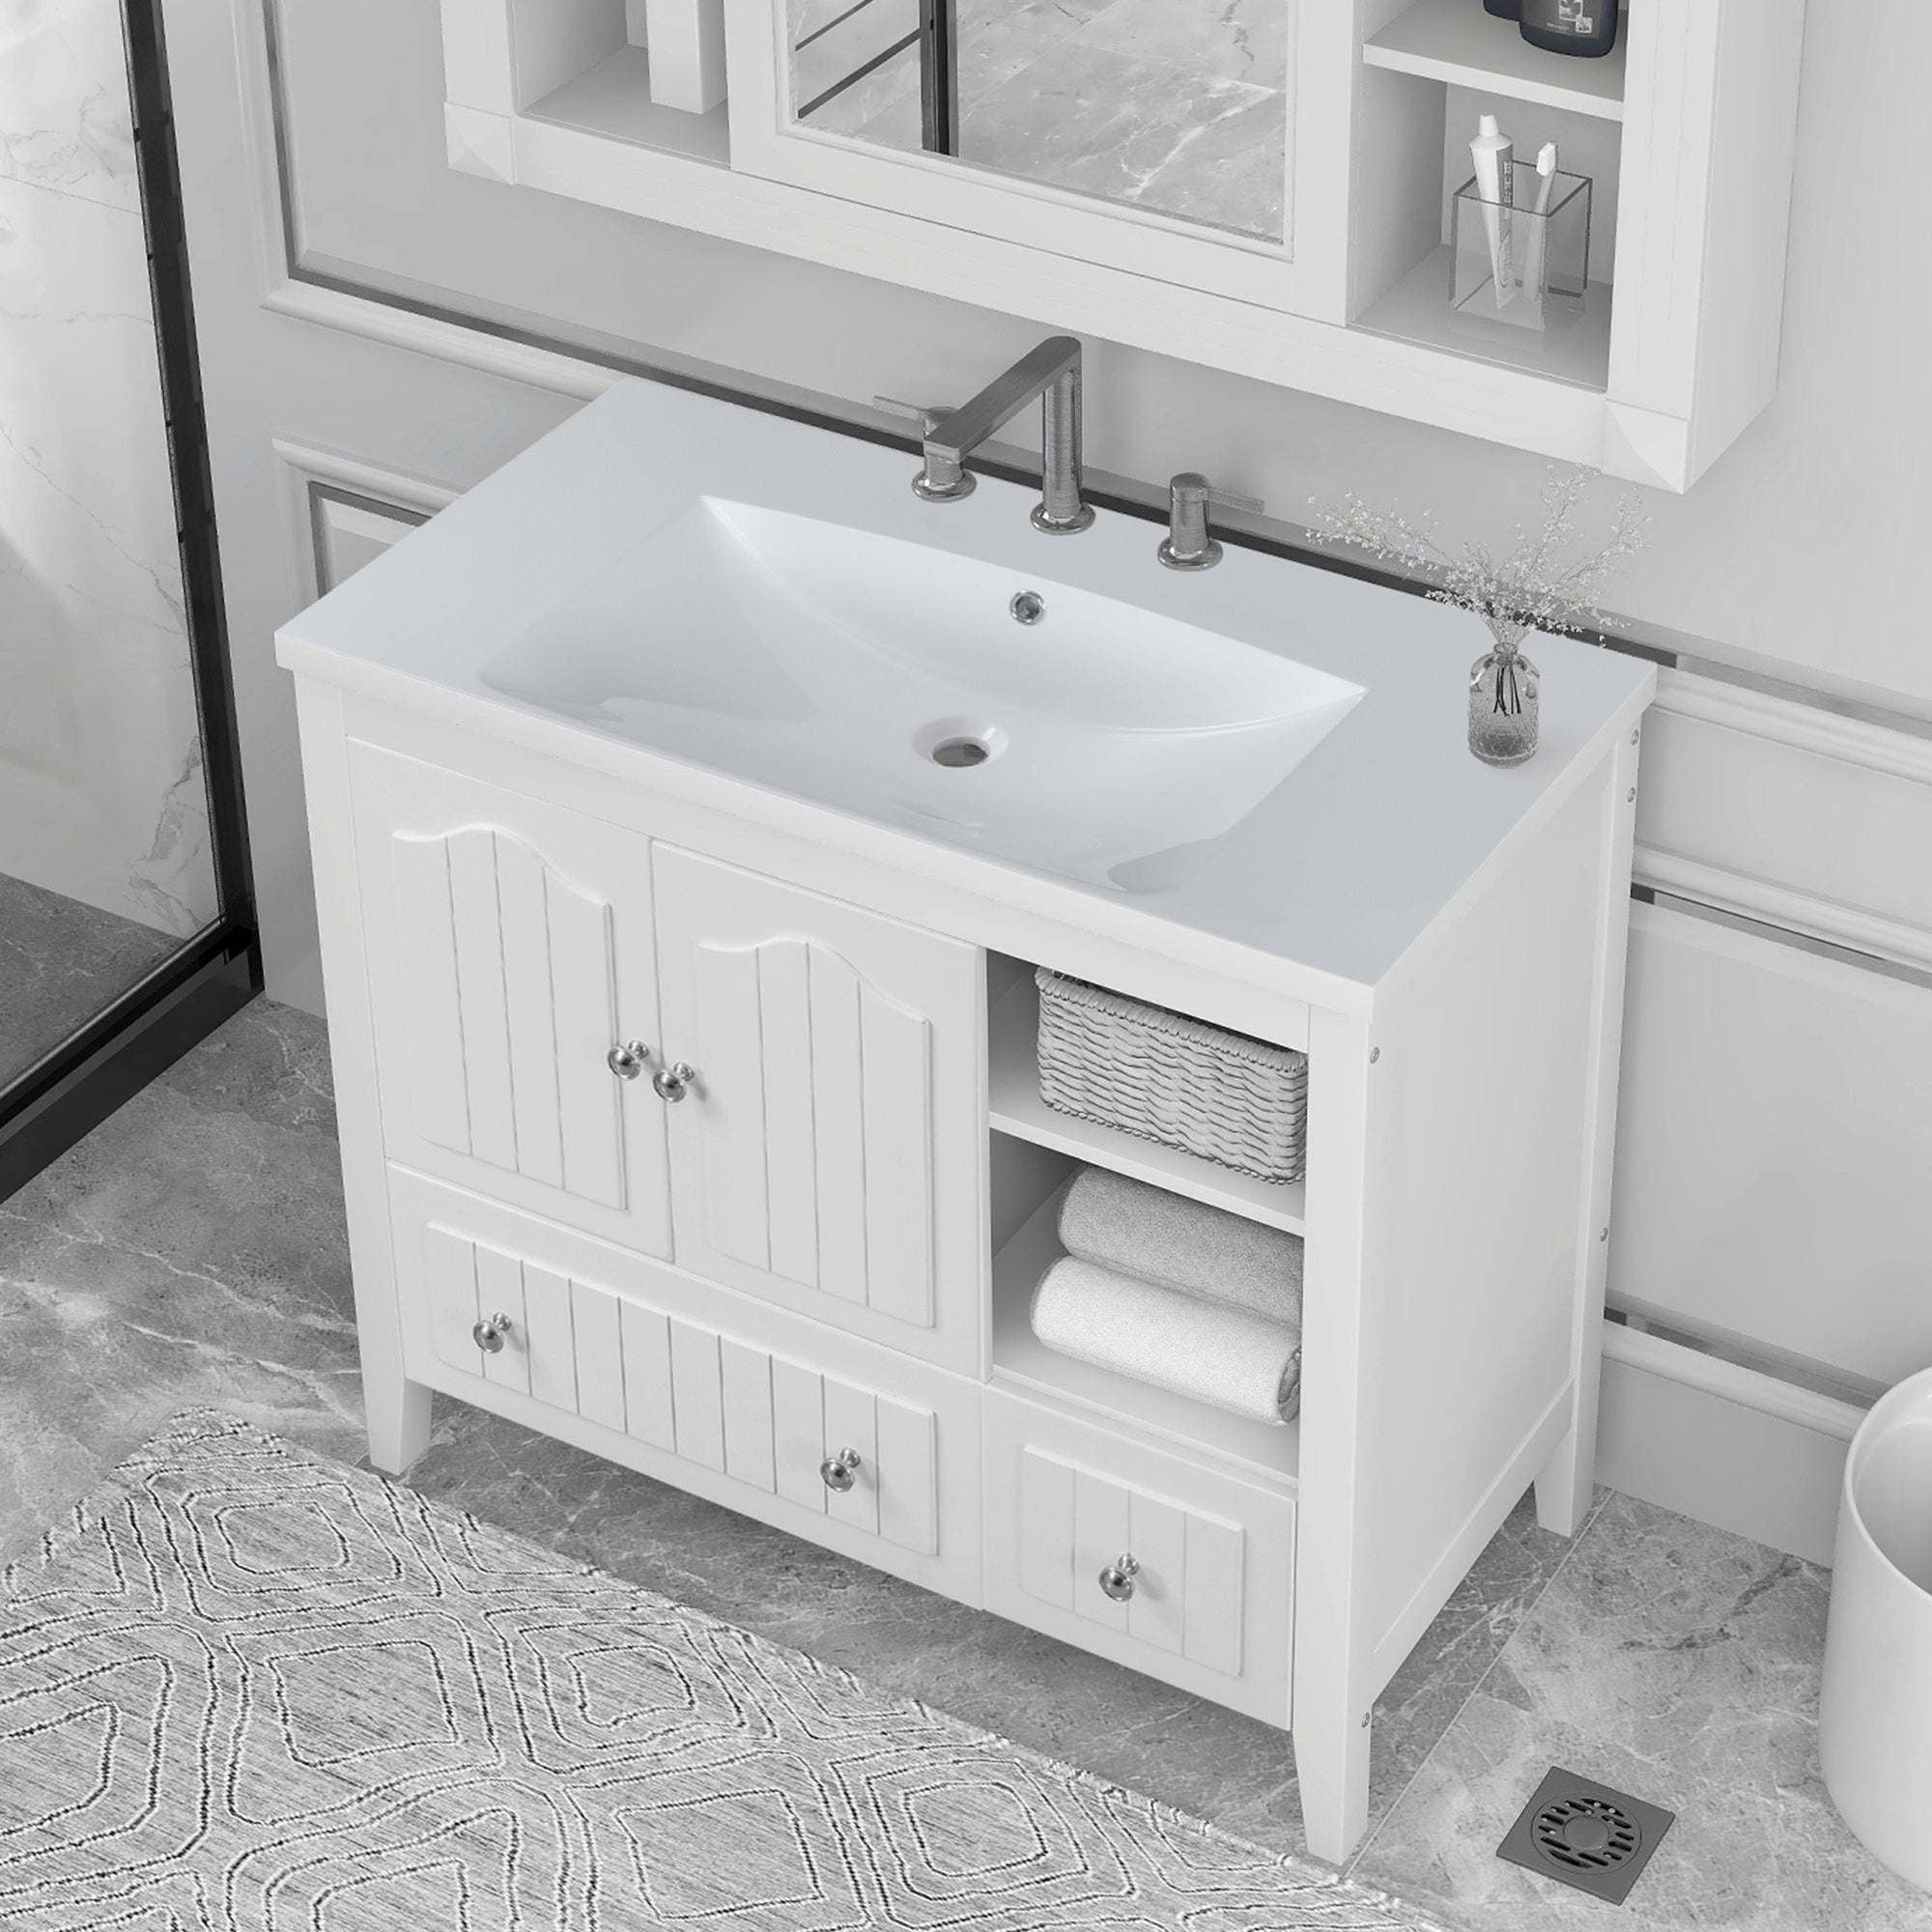 36" Bathroom Vanity with Ceramic Basin